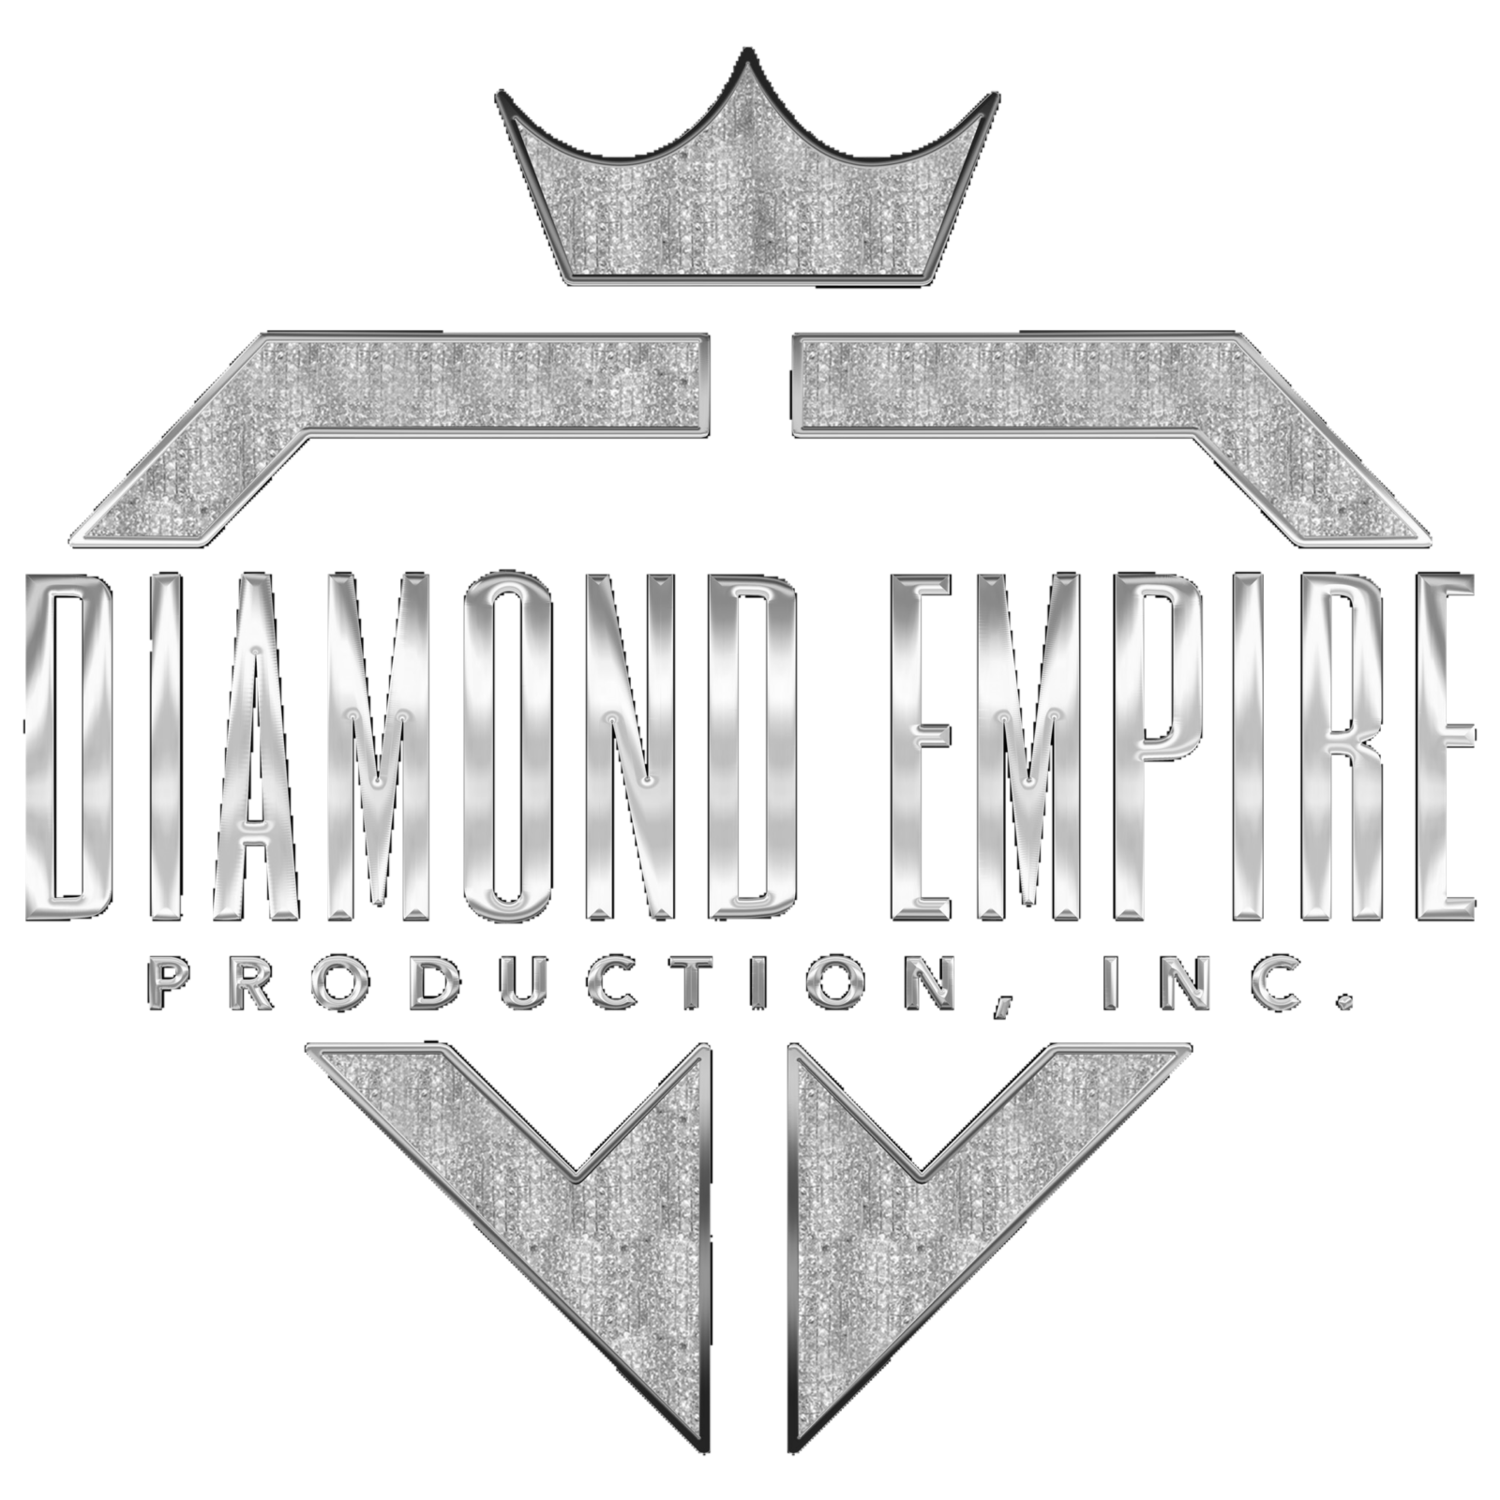 Diamond Empire Production Inc.